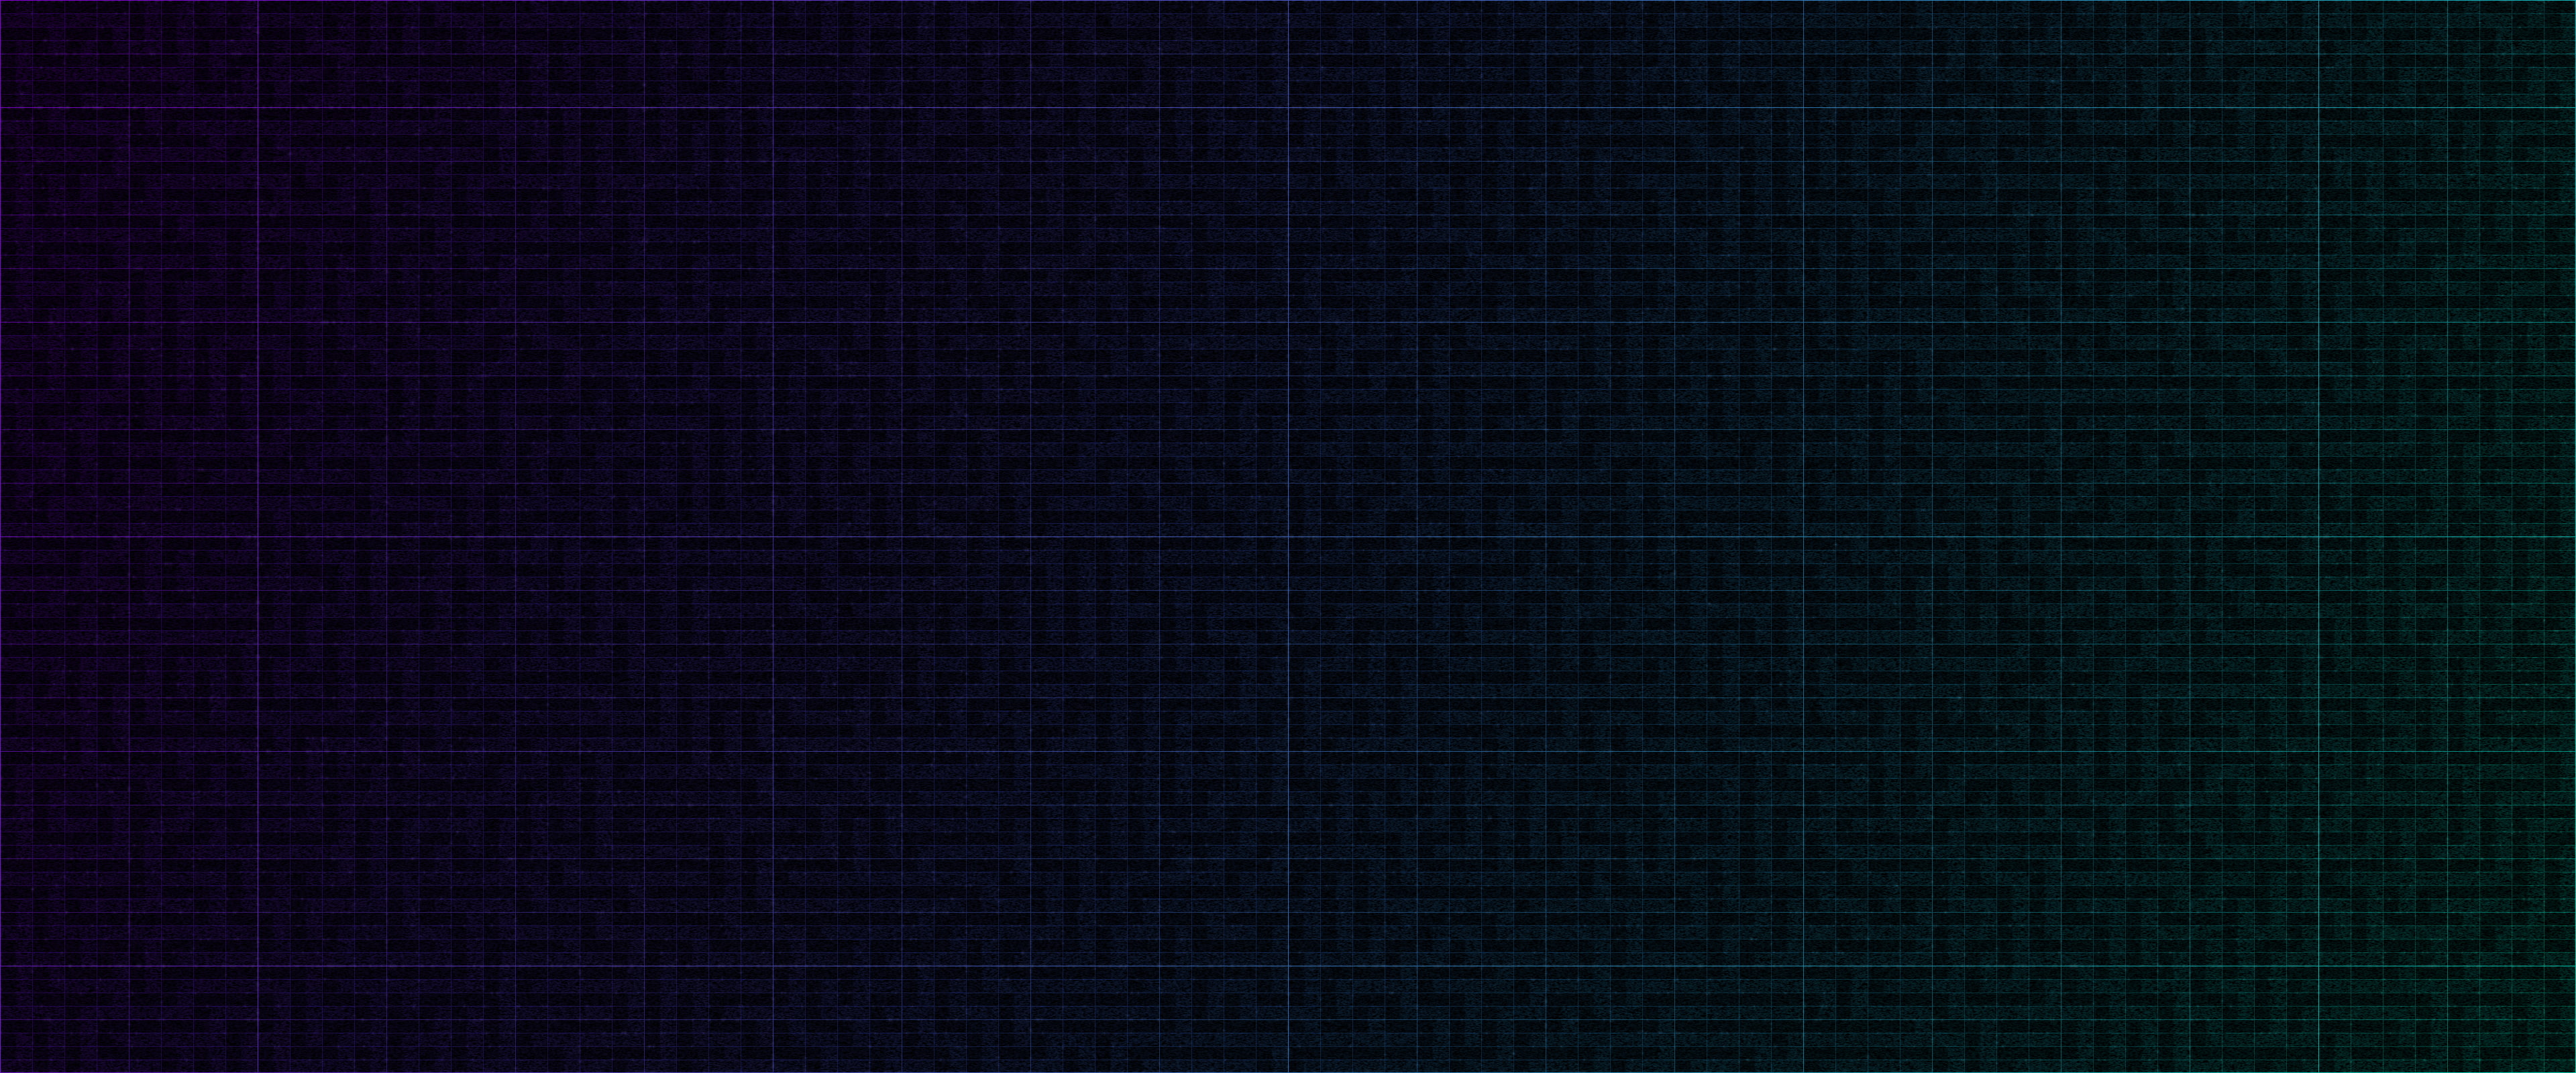 grid, gradient, minimalism, lines